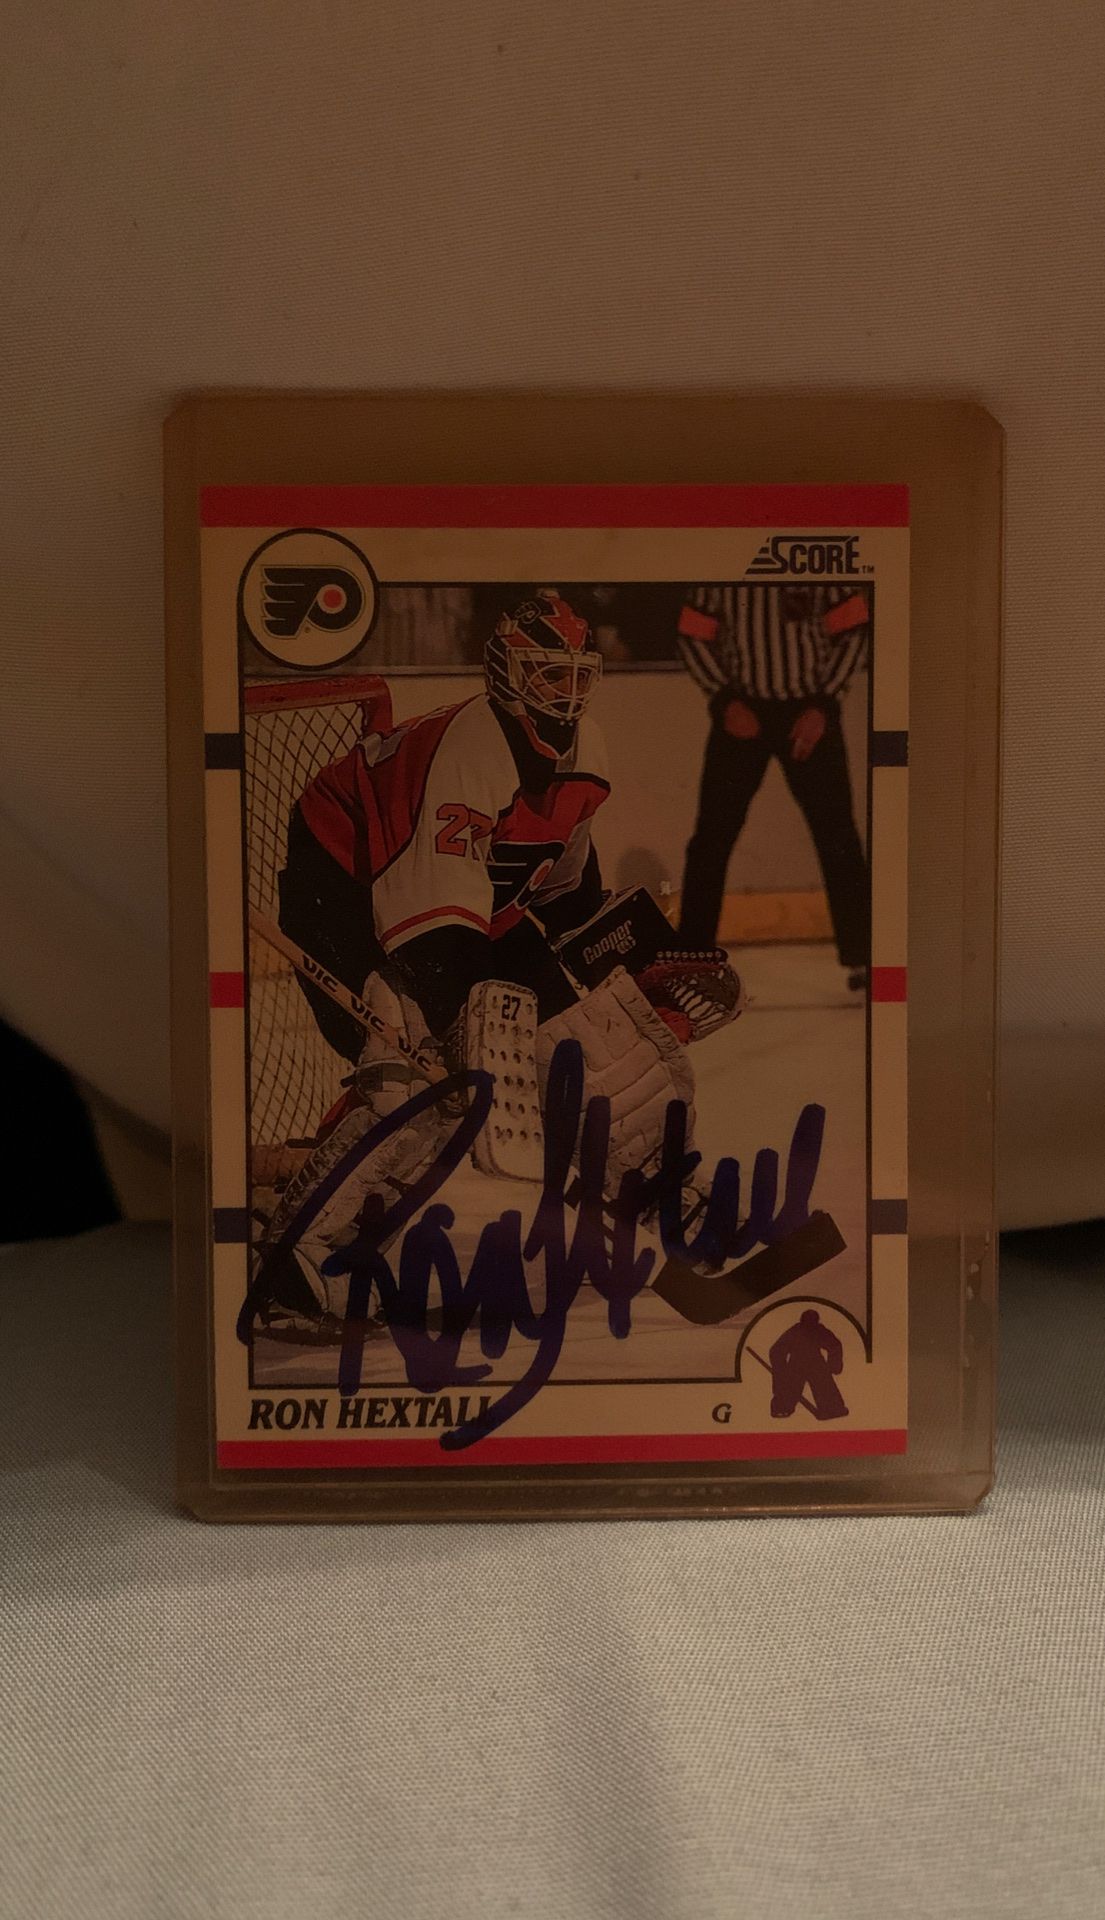 Autographed Hockey card